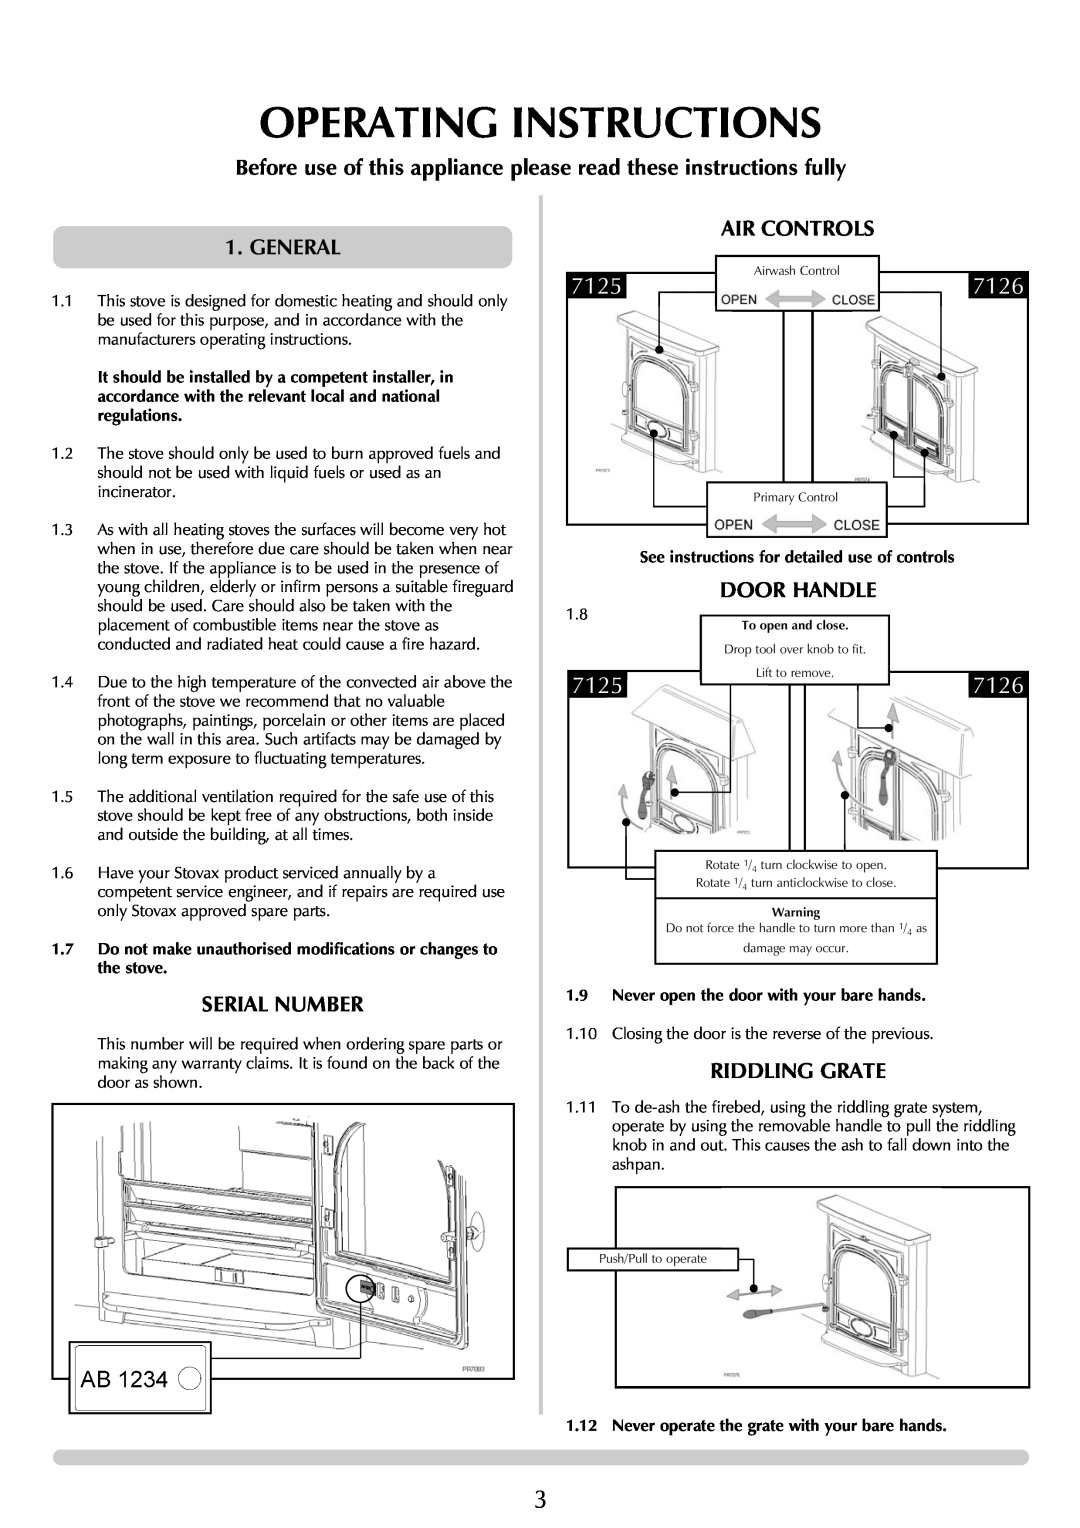 Stovax 7126 manual Operating Instructions, 7125, General, Serial Number, Riddling Grate, Door Handle, Air Controls 